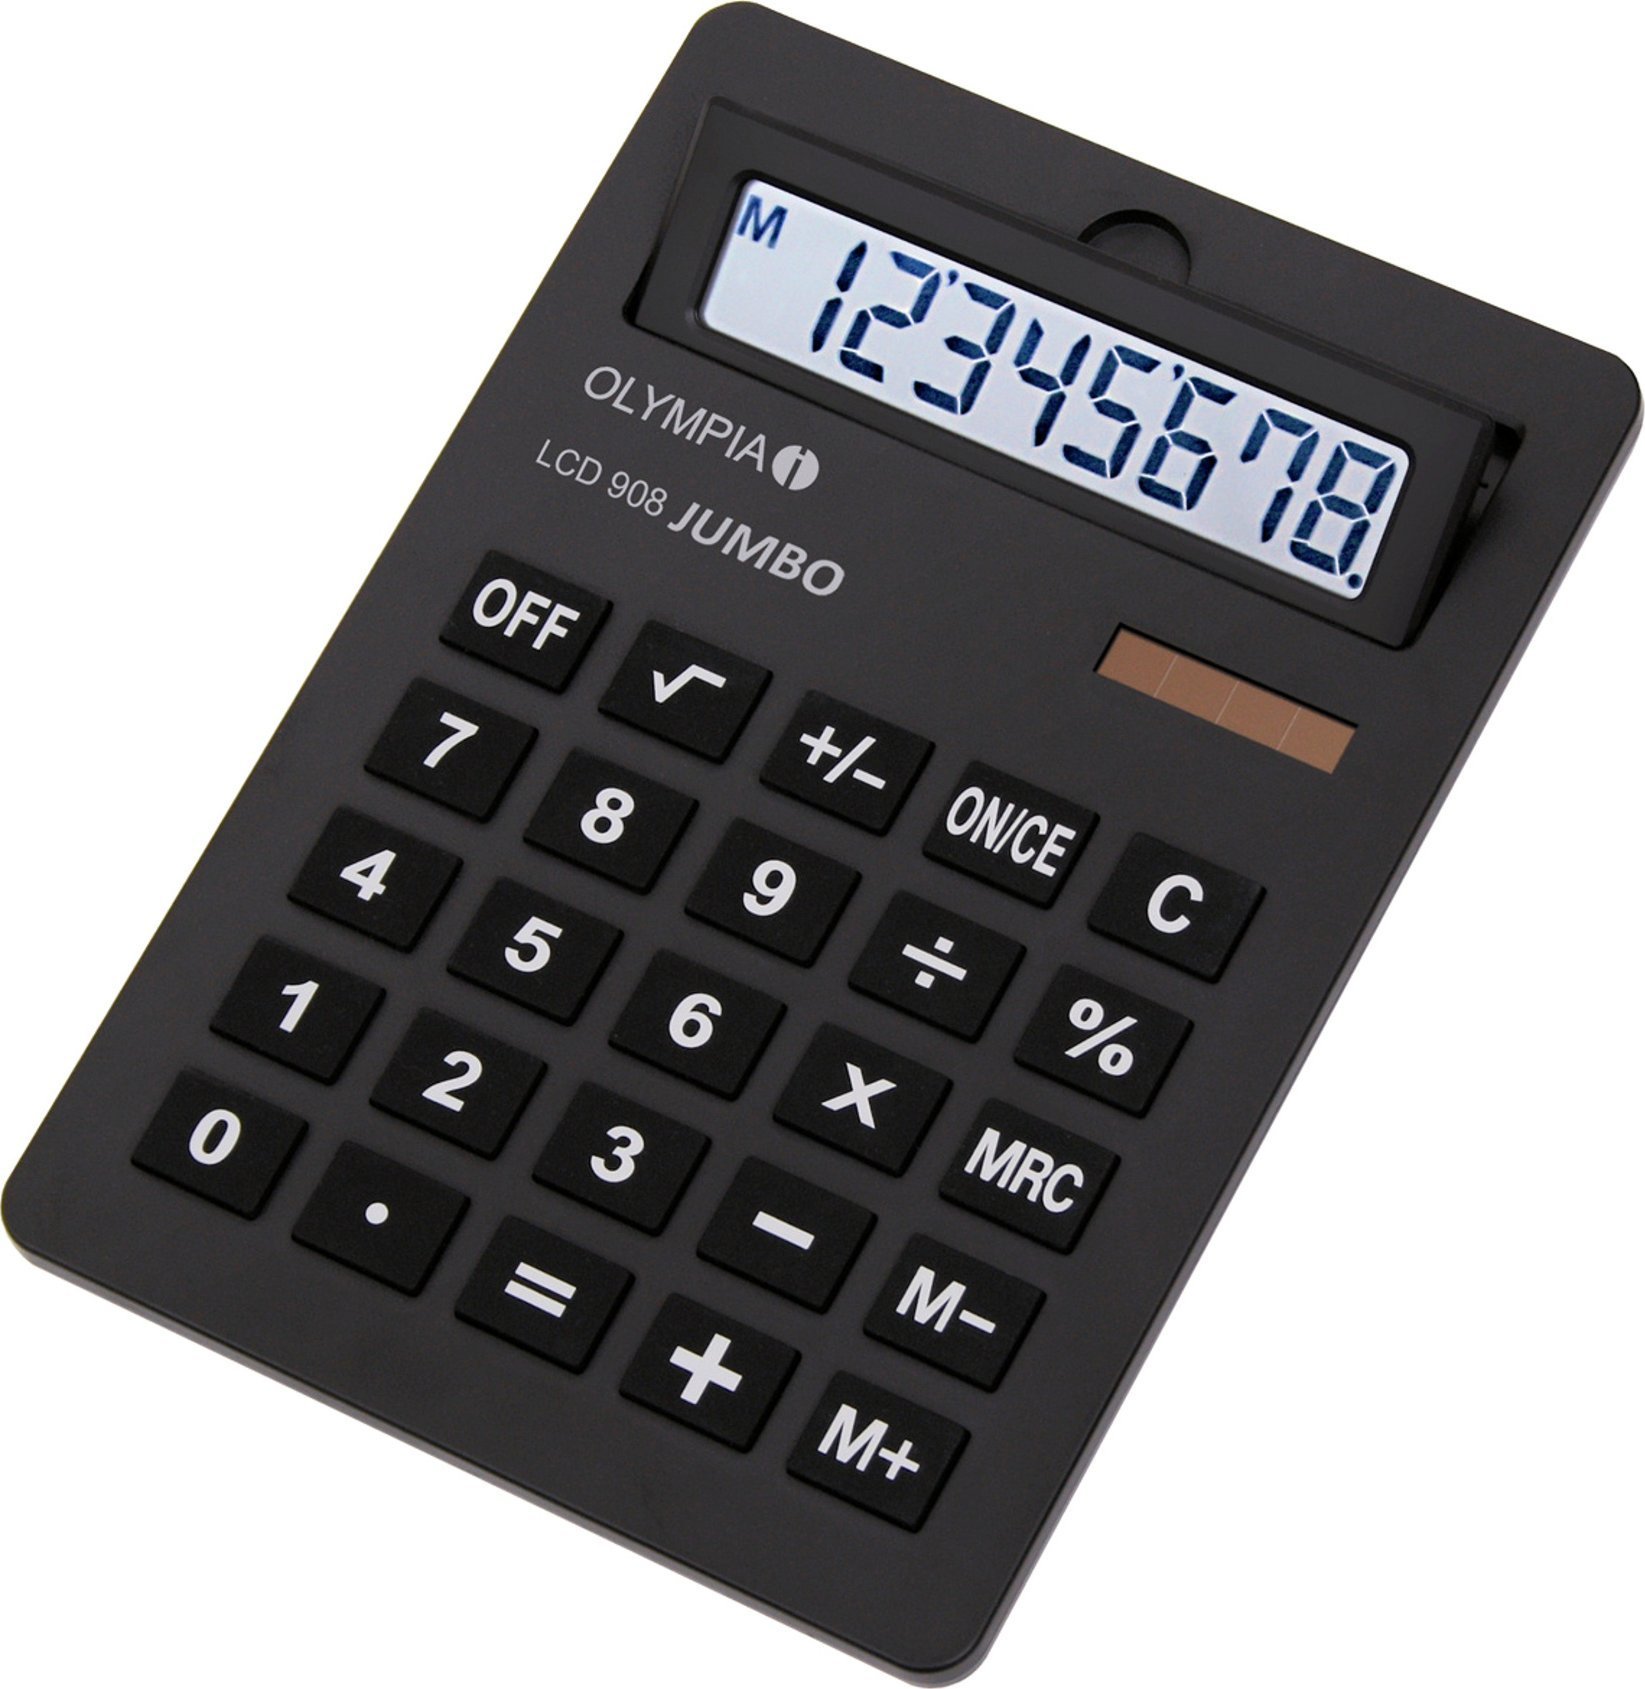 Calculator Olympia Olympia Taschenrechner LCD-908